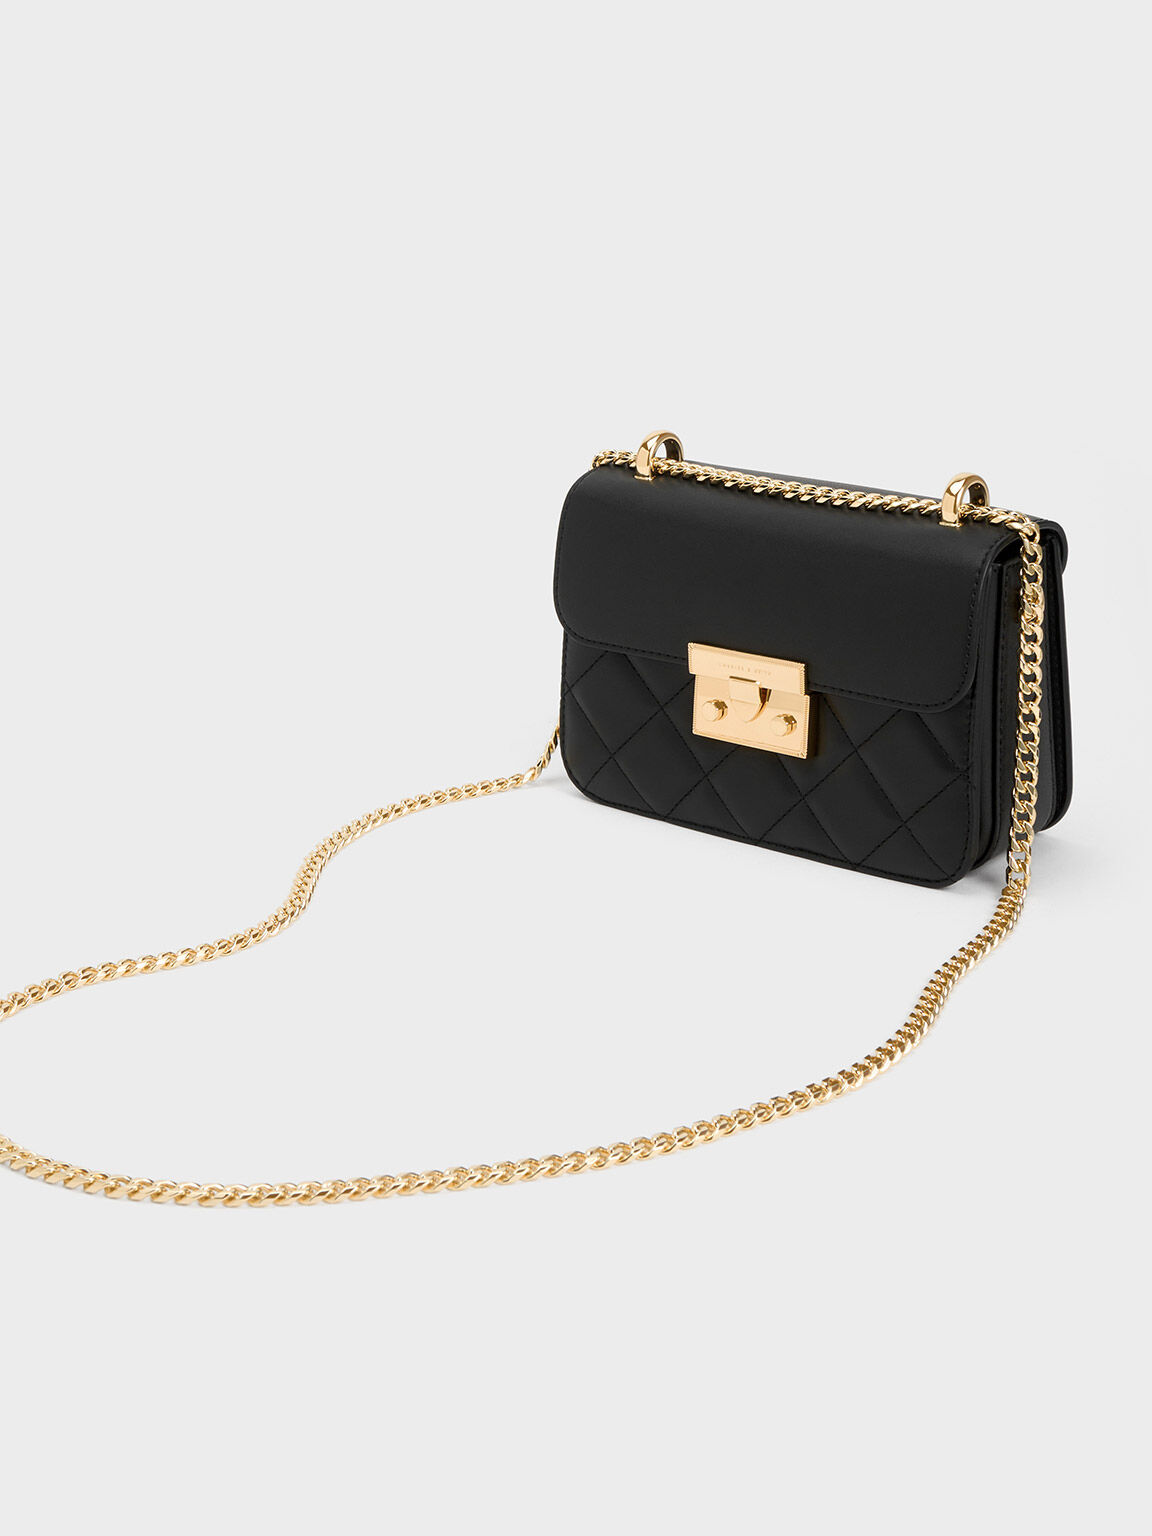 Black purse with gold and black chain | Black purses, Black chain, Purses